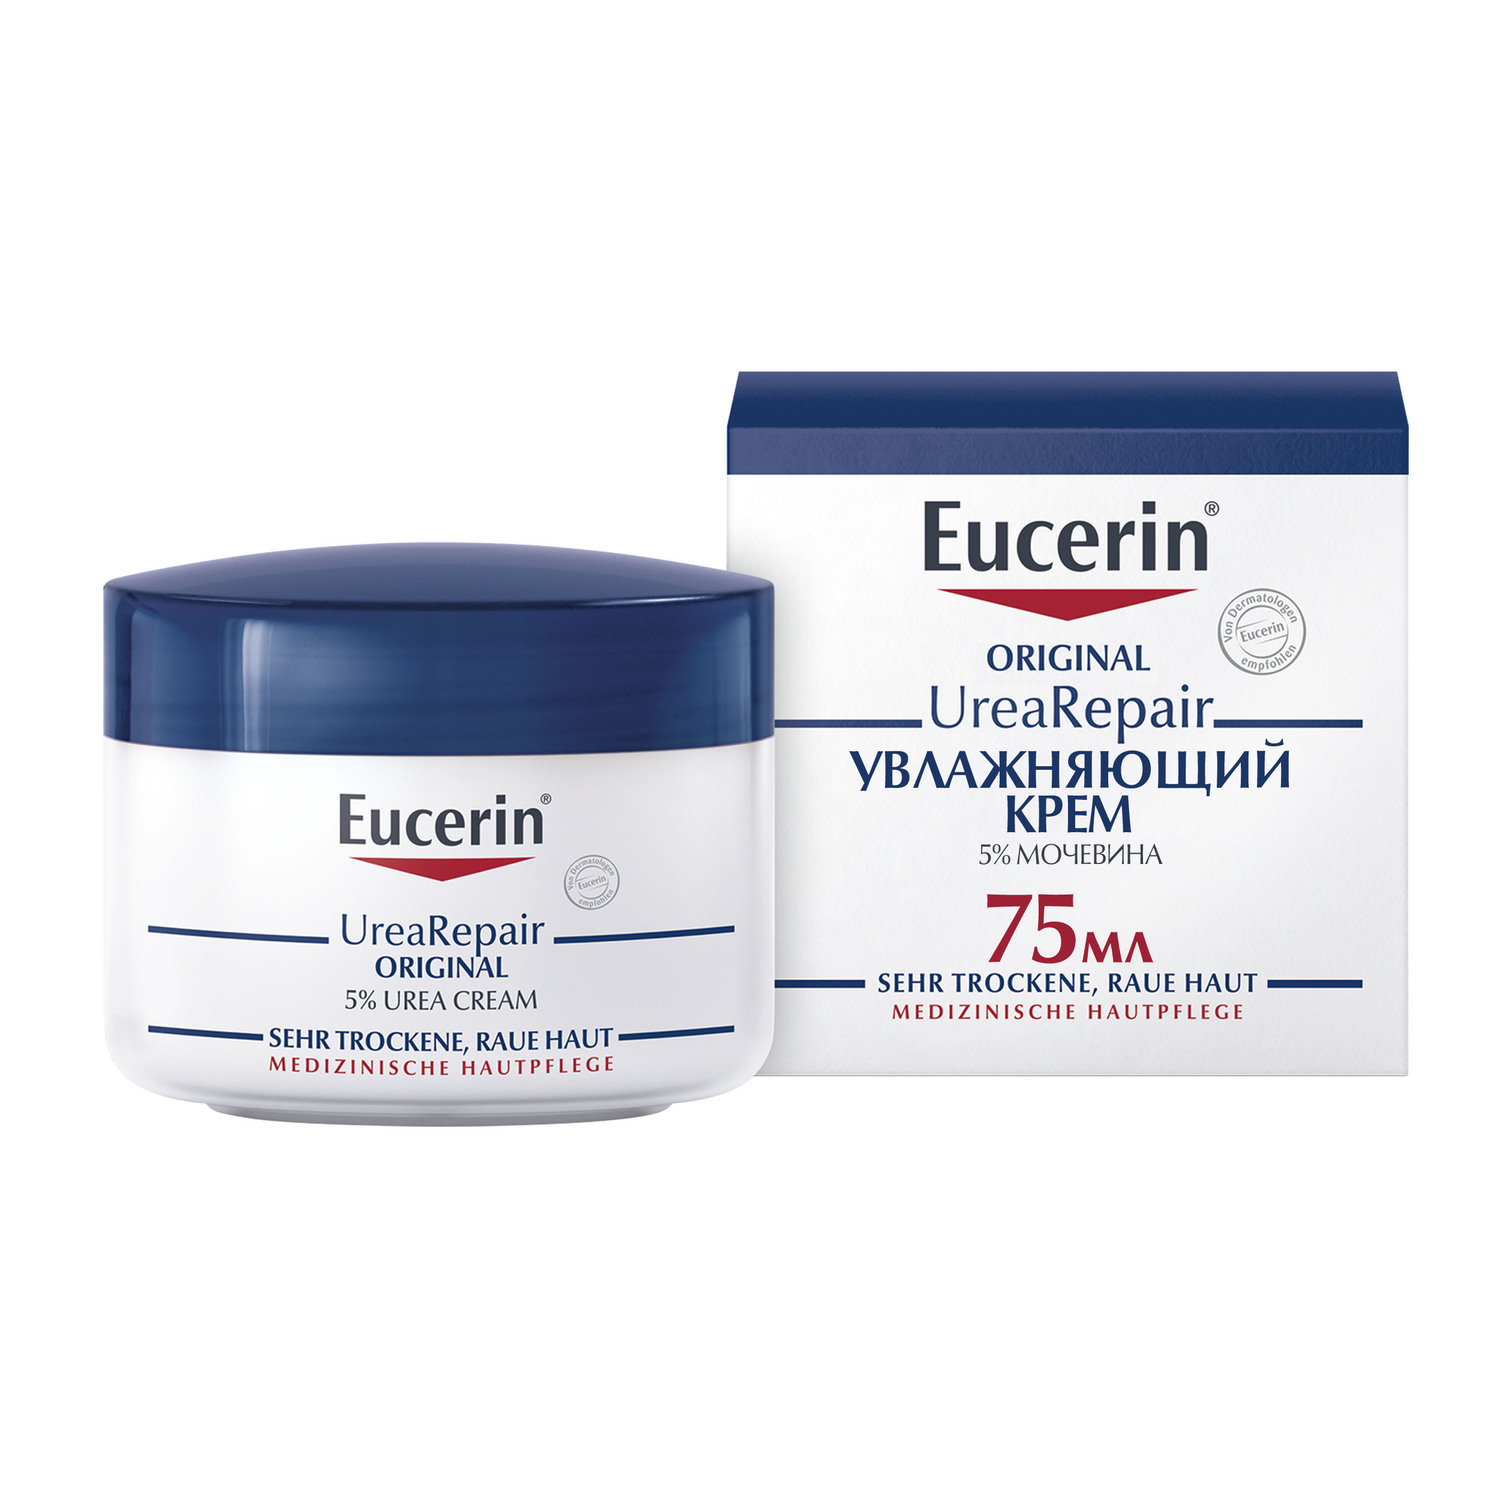 Eucerin Увлажняющий крем с 5% мочевиной, 75 мл (Eucerin, UreaRepair) уход за телом eucerin увлажняющий крем с 5% мочевиной urearepair plus